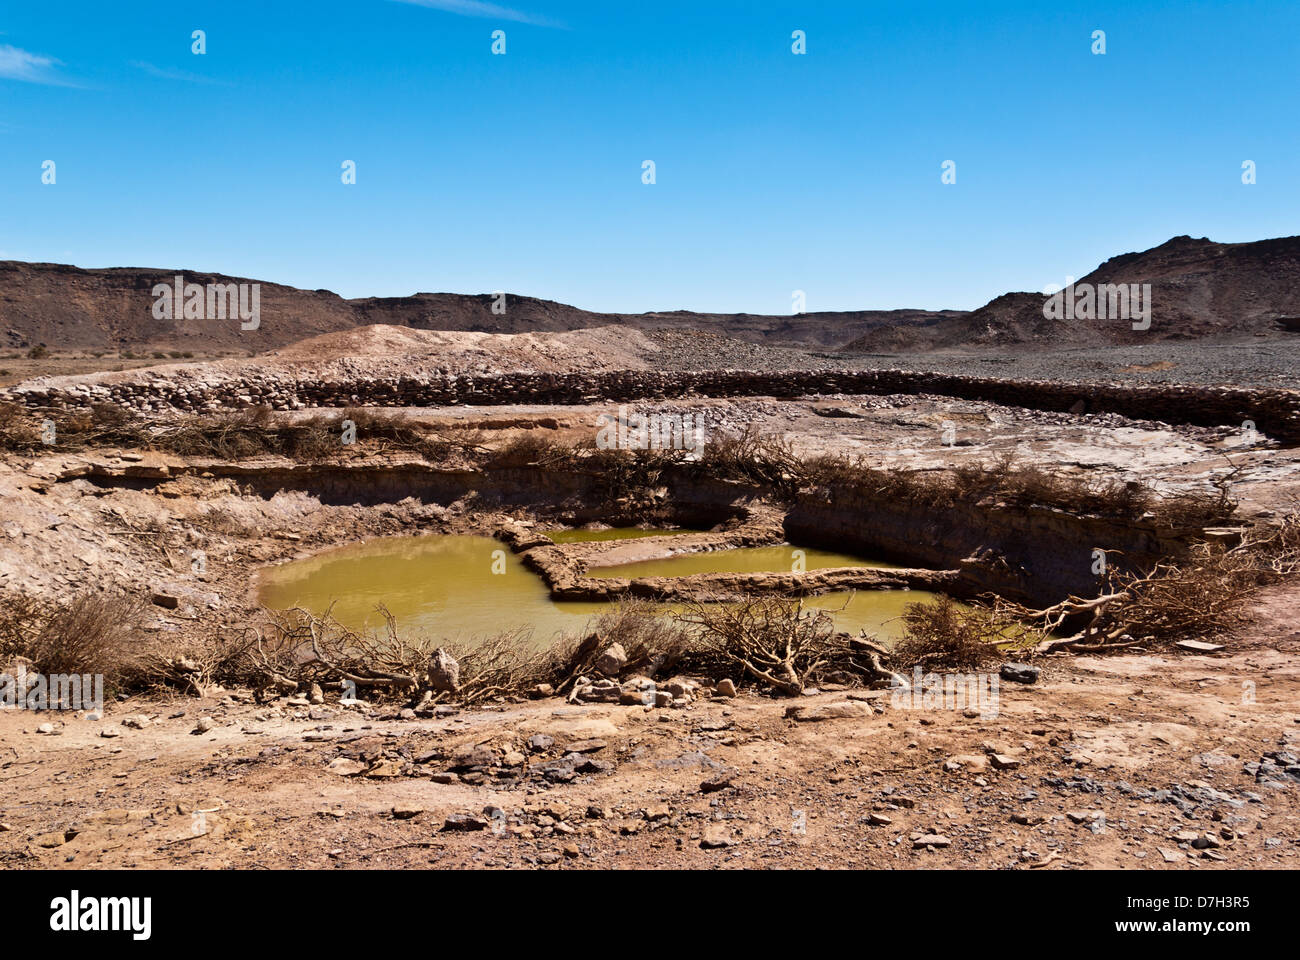 Hafir - a reservoir used to catch rainwater, near Naqa, northern Sudan Stock Photo